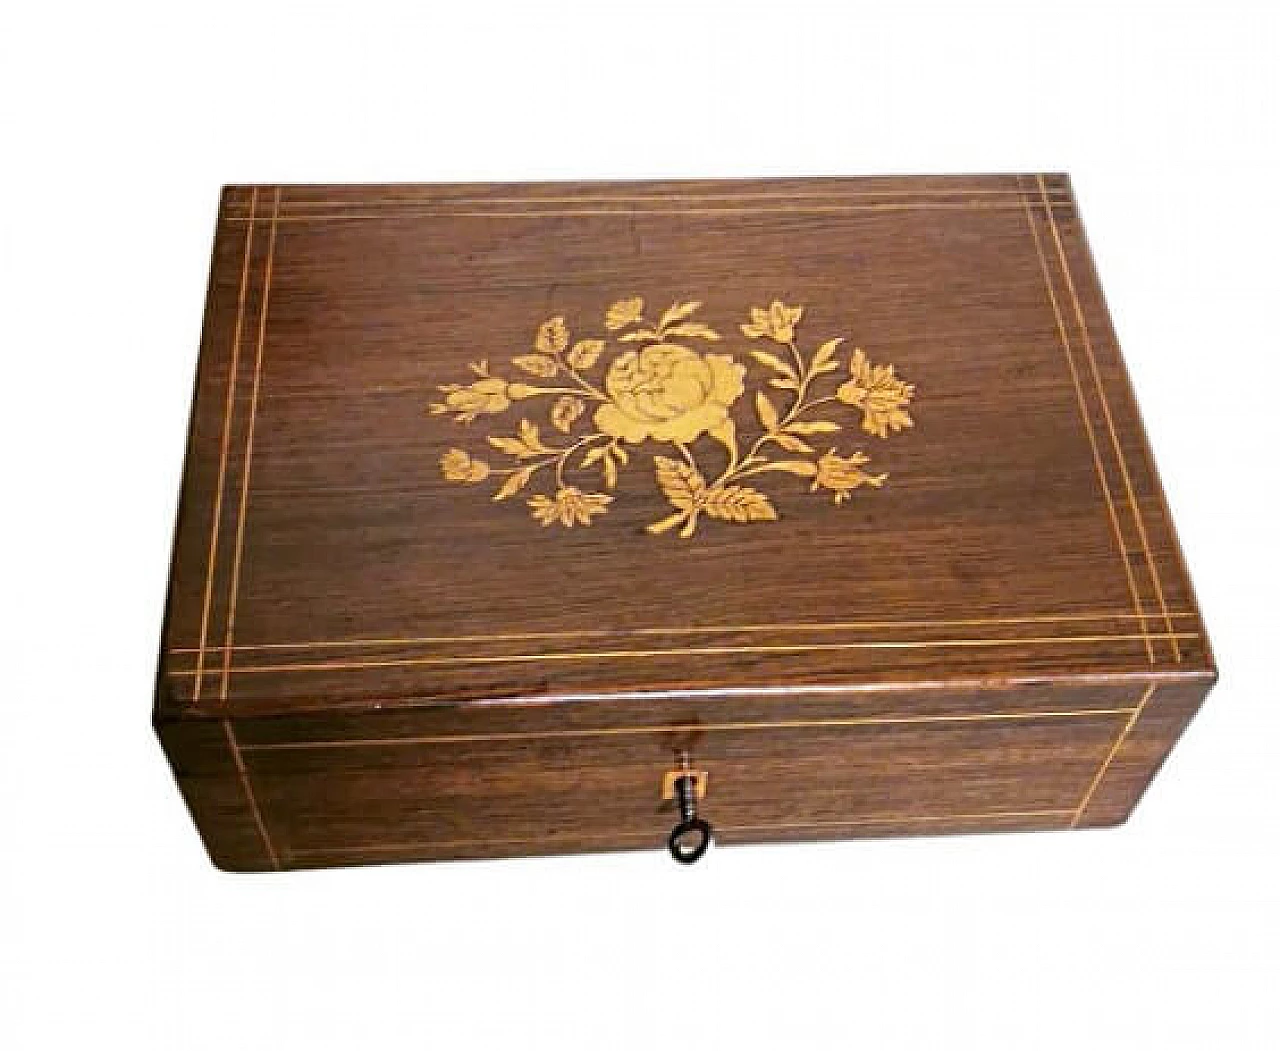 Napoleon III style walnut casket with inlays, late 19th century 1